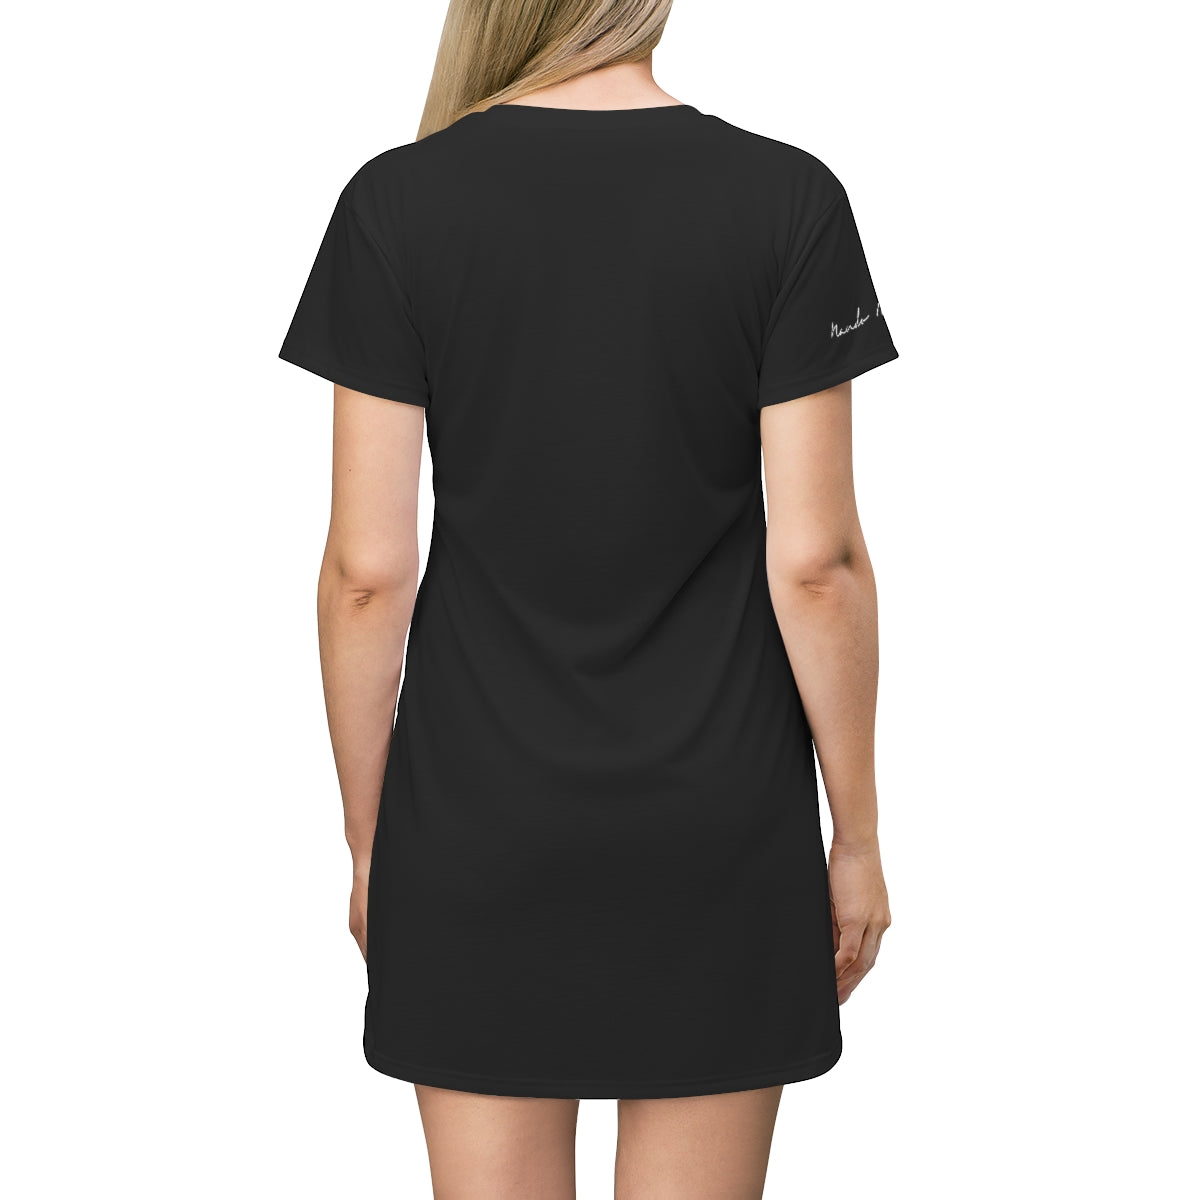 Shirtdress, Black Floral Motive